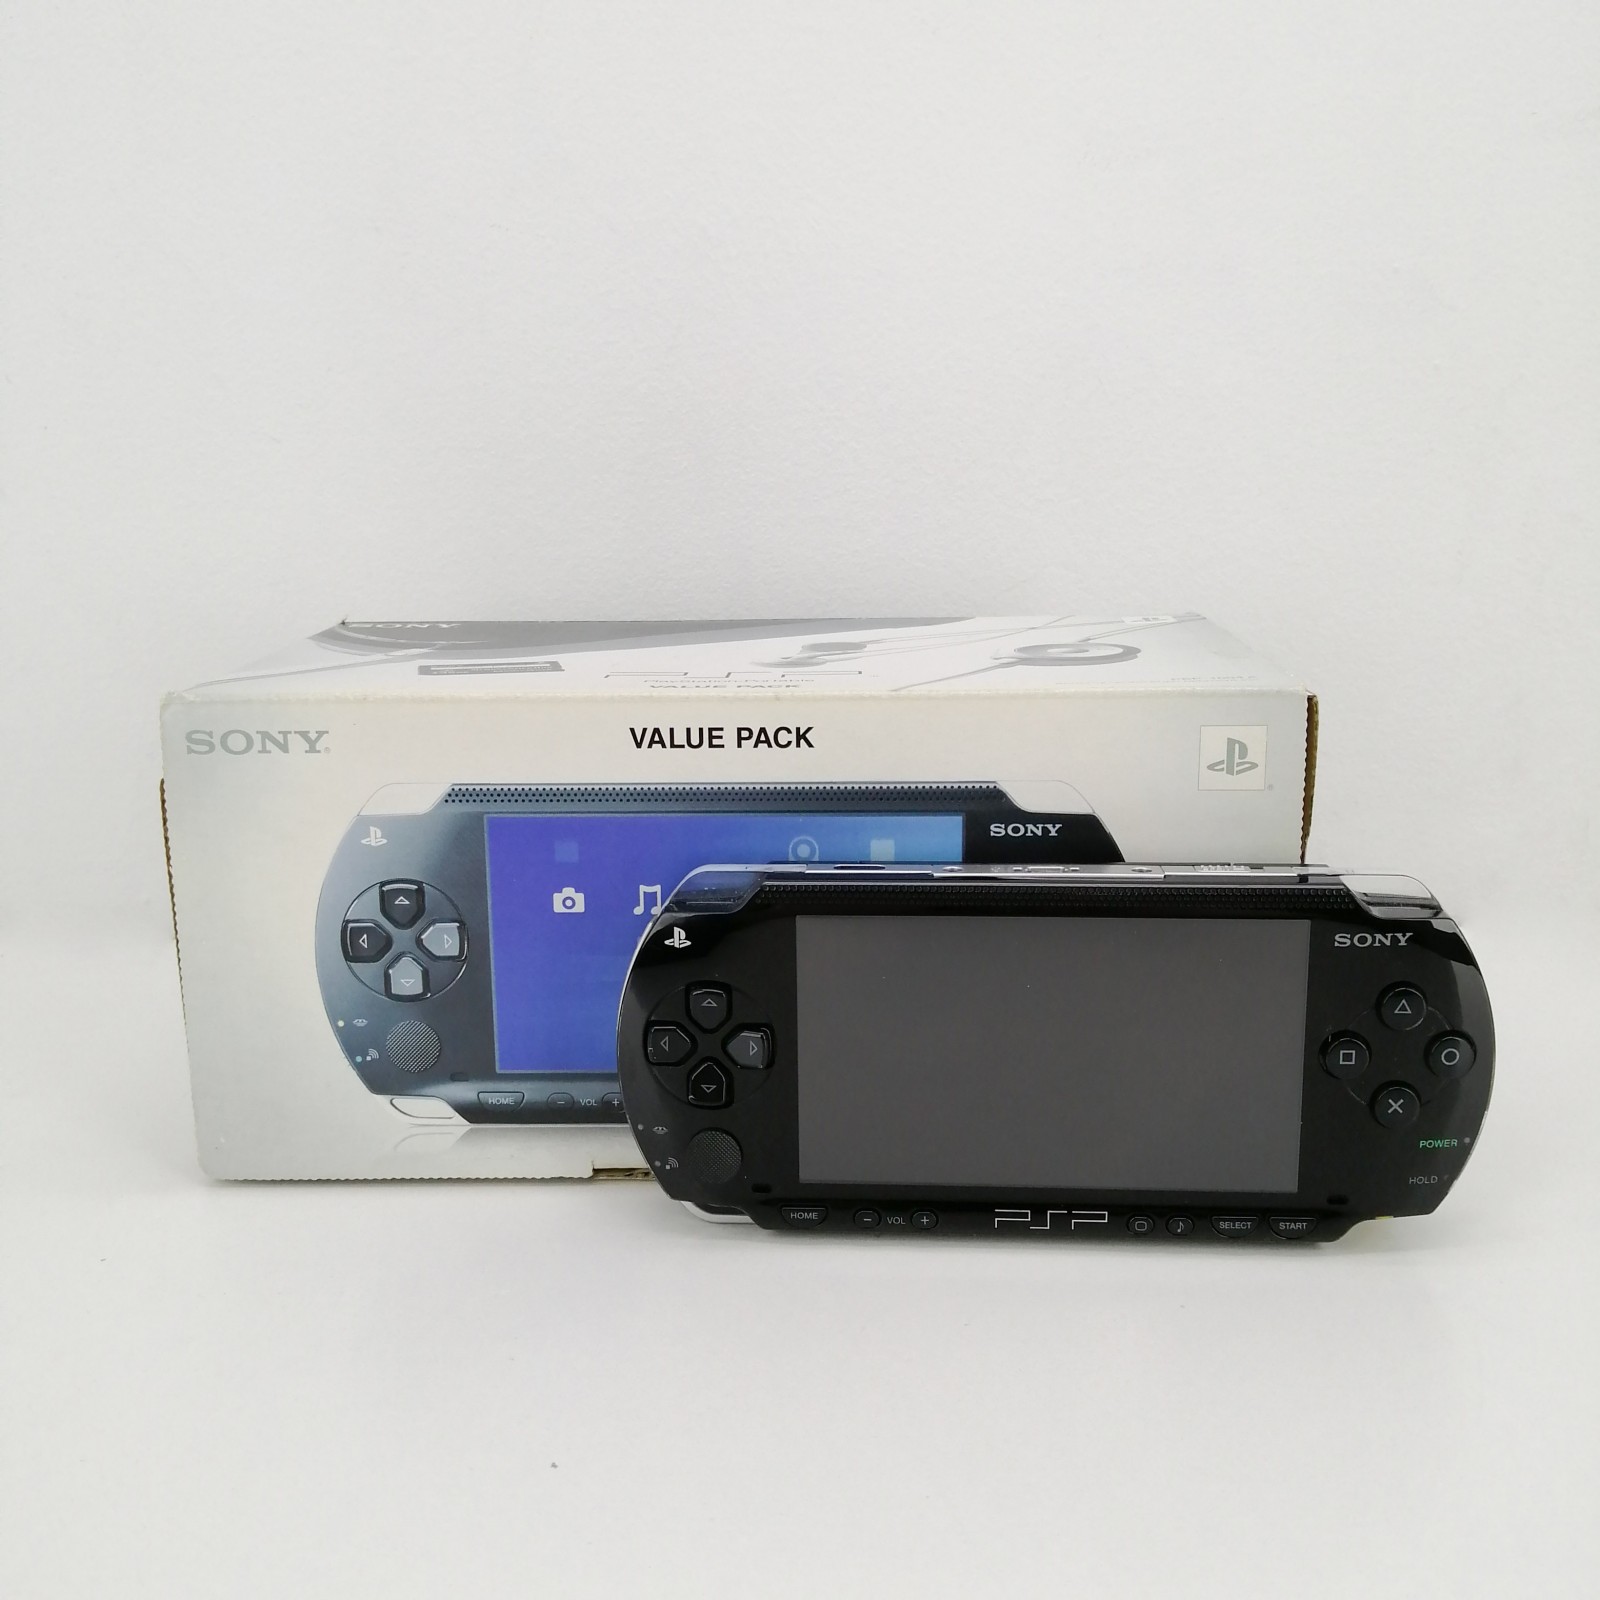 Consola Sony PSP Modelo 1004K Value Pack con caja original y papeles de  segunda mano